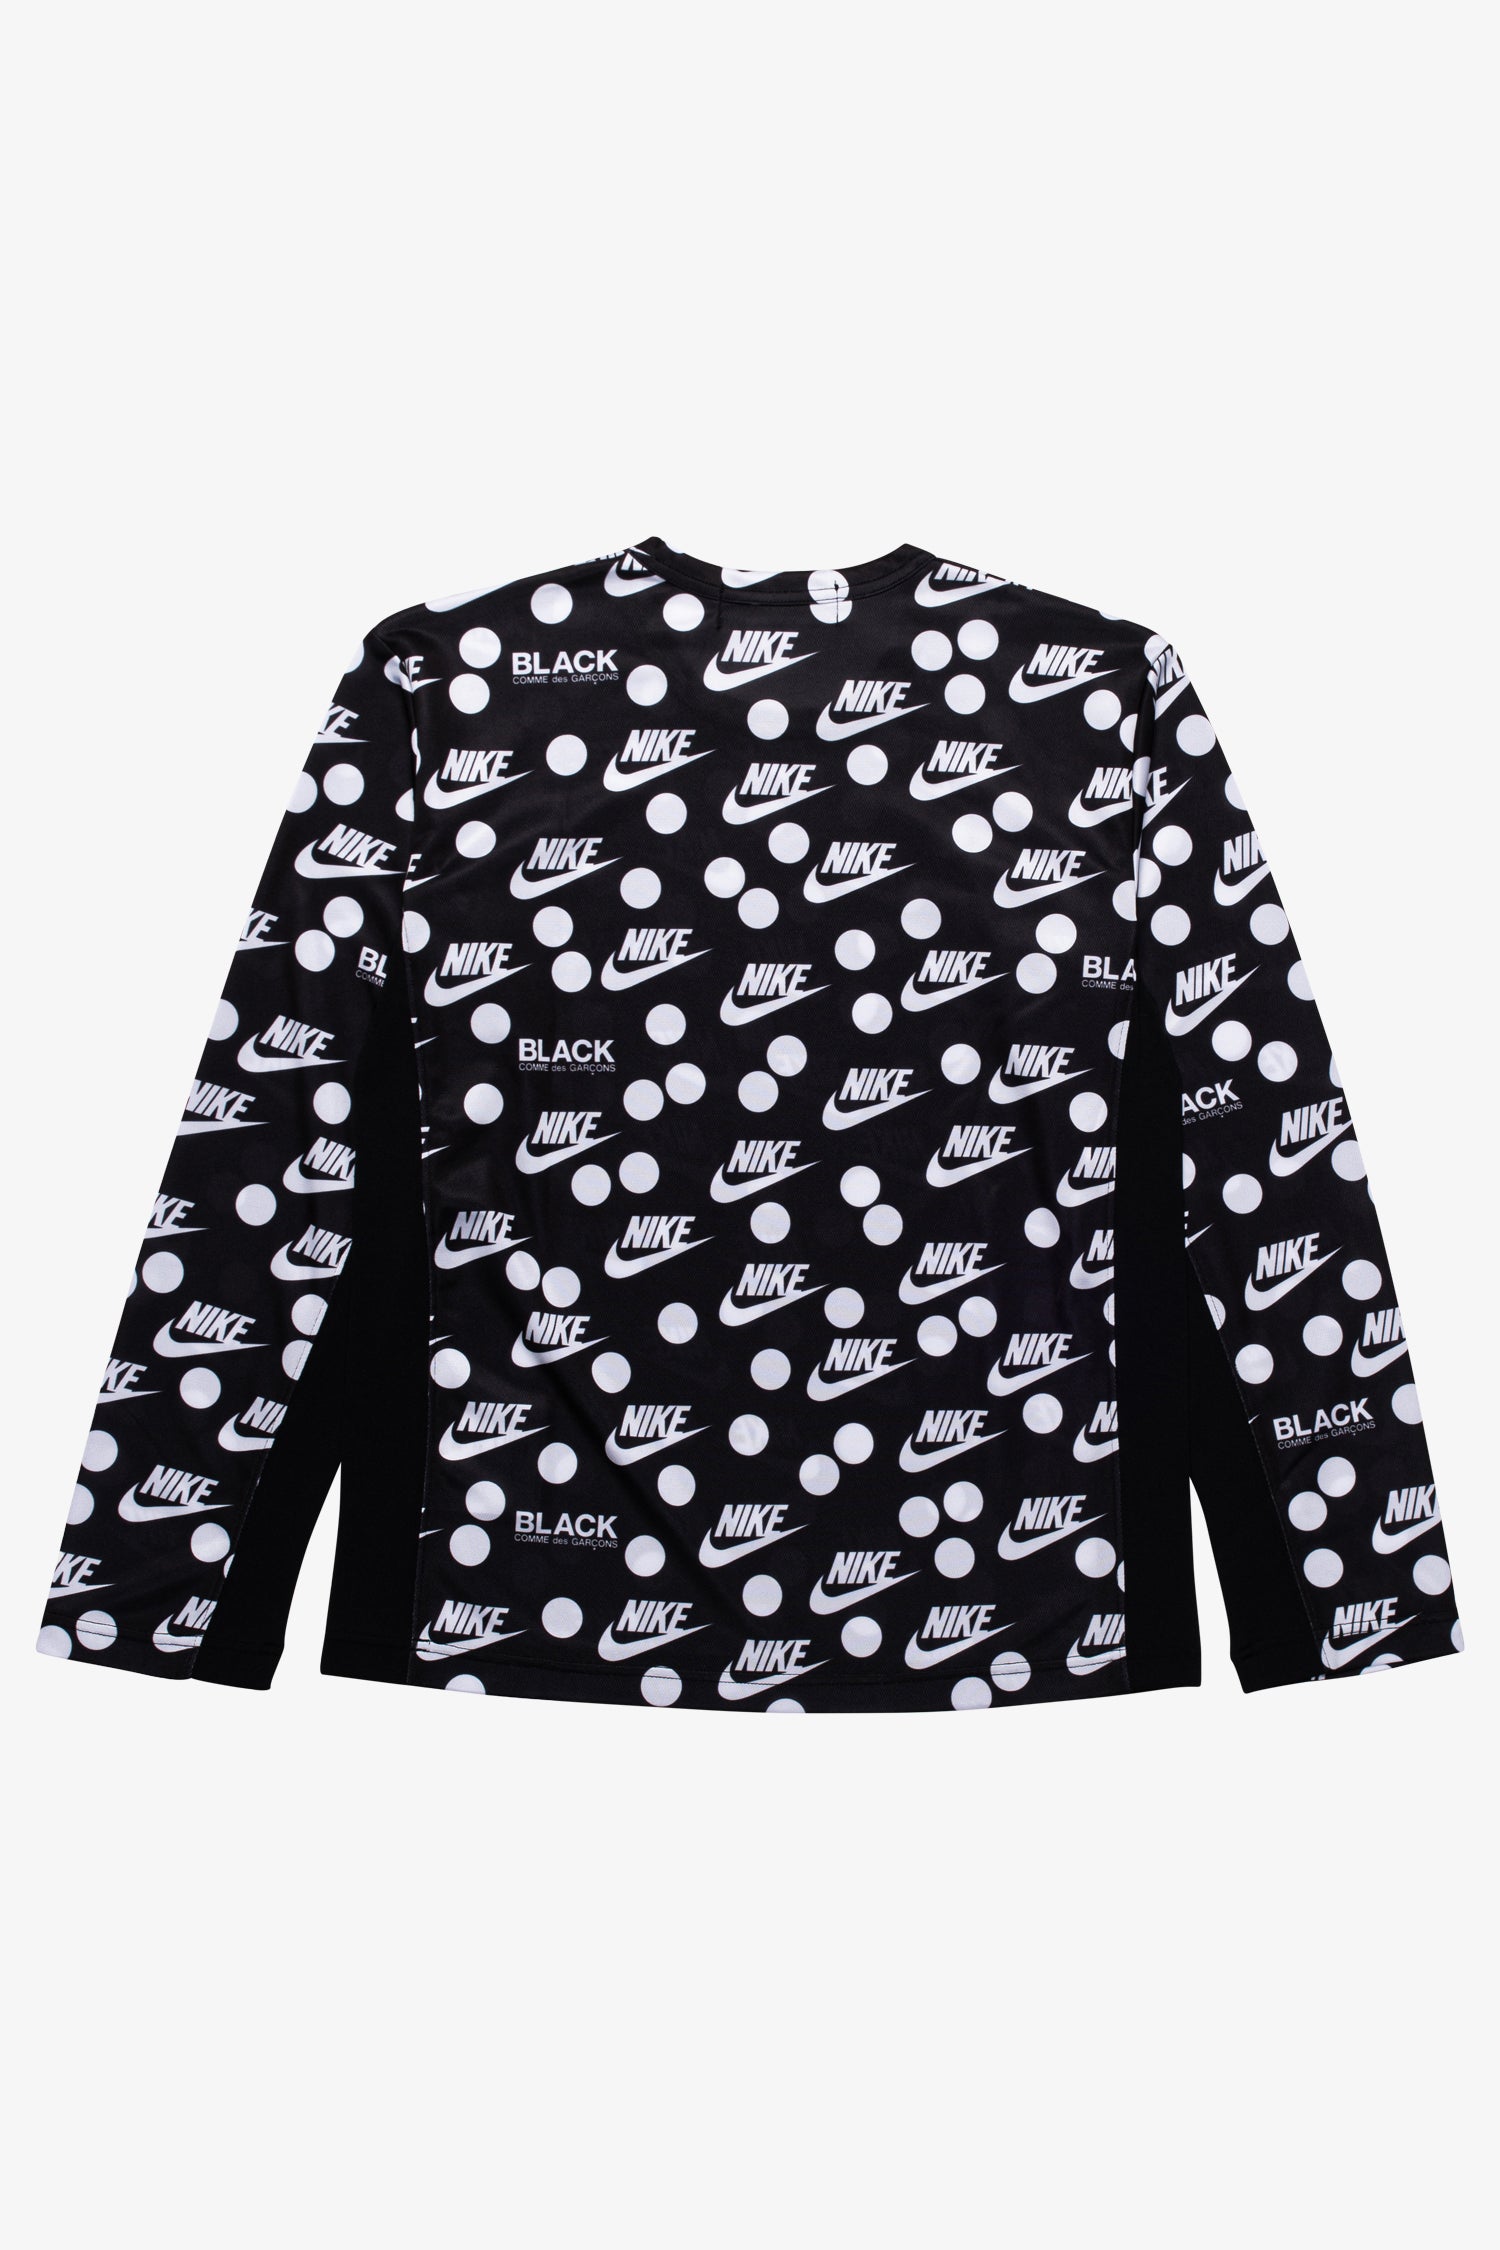 Selectshop FRAME - COMME DES GARCONS BLACK Nike Polka Dot Mesh Jersey Longsleeve T-Shirt Dubai